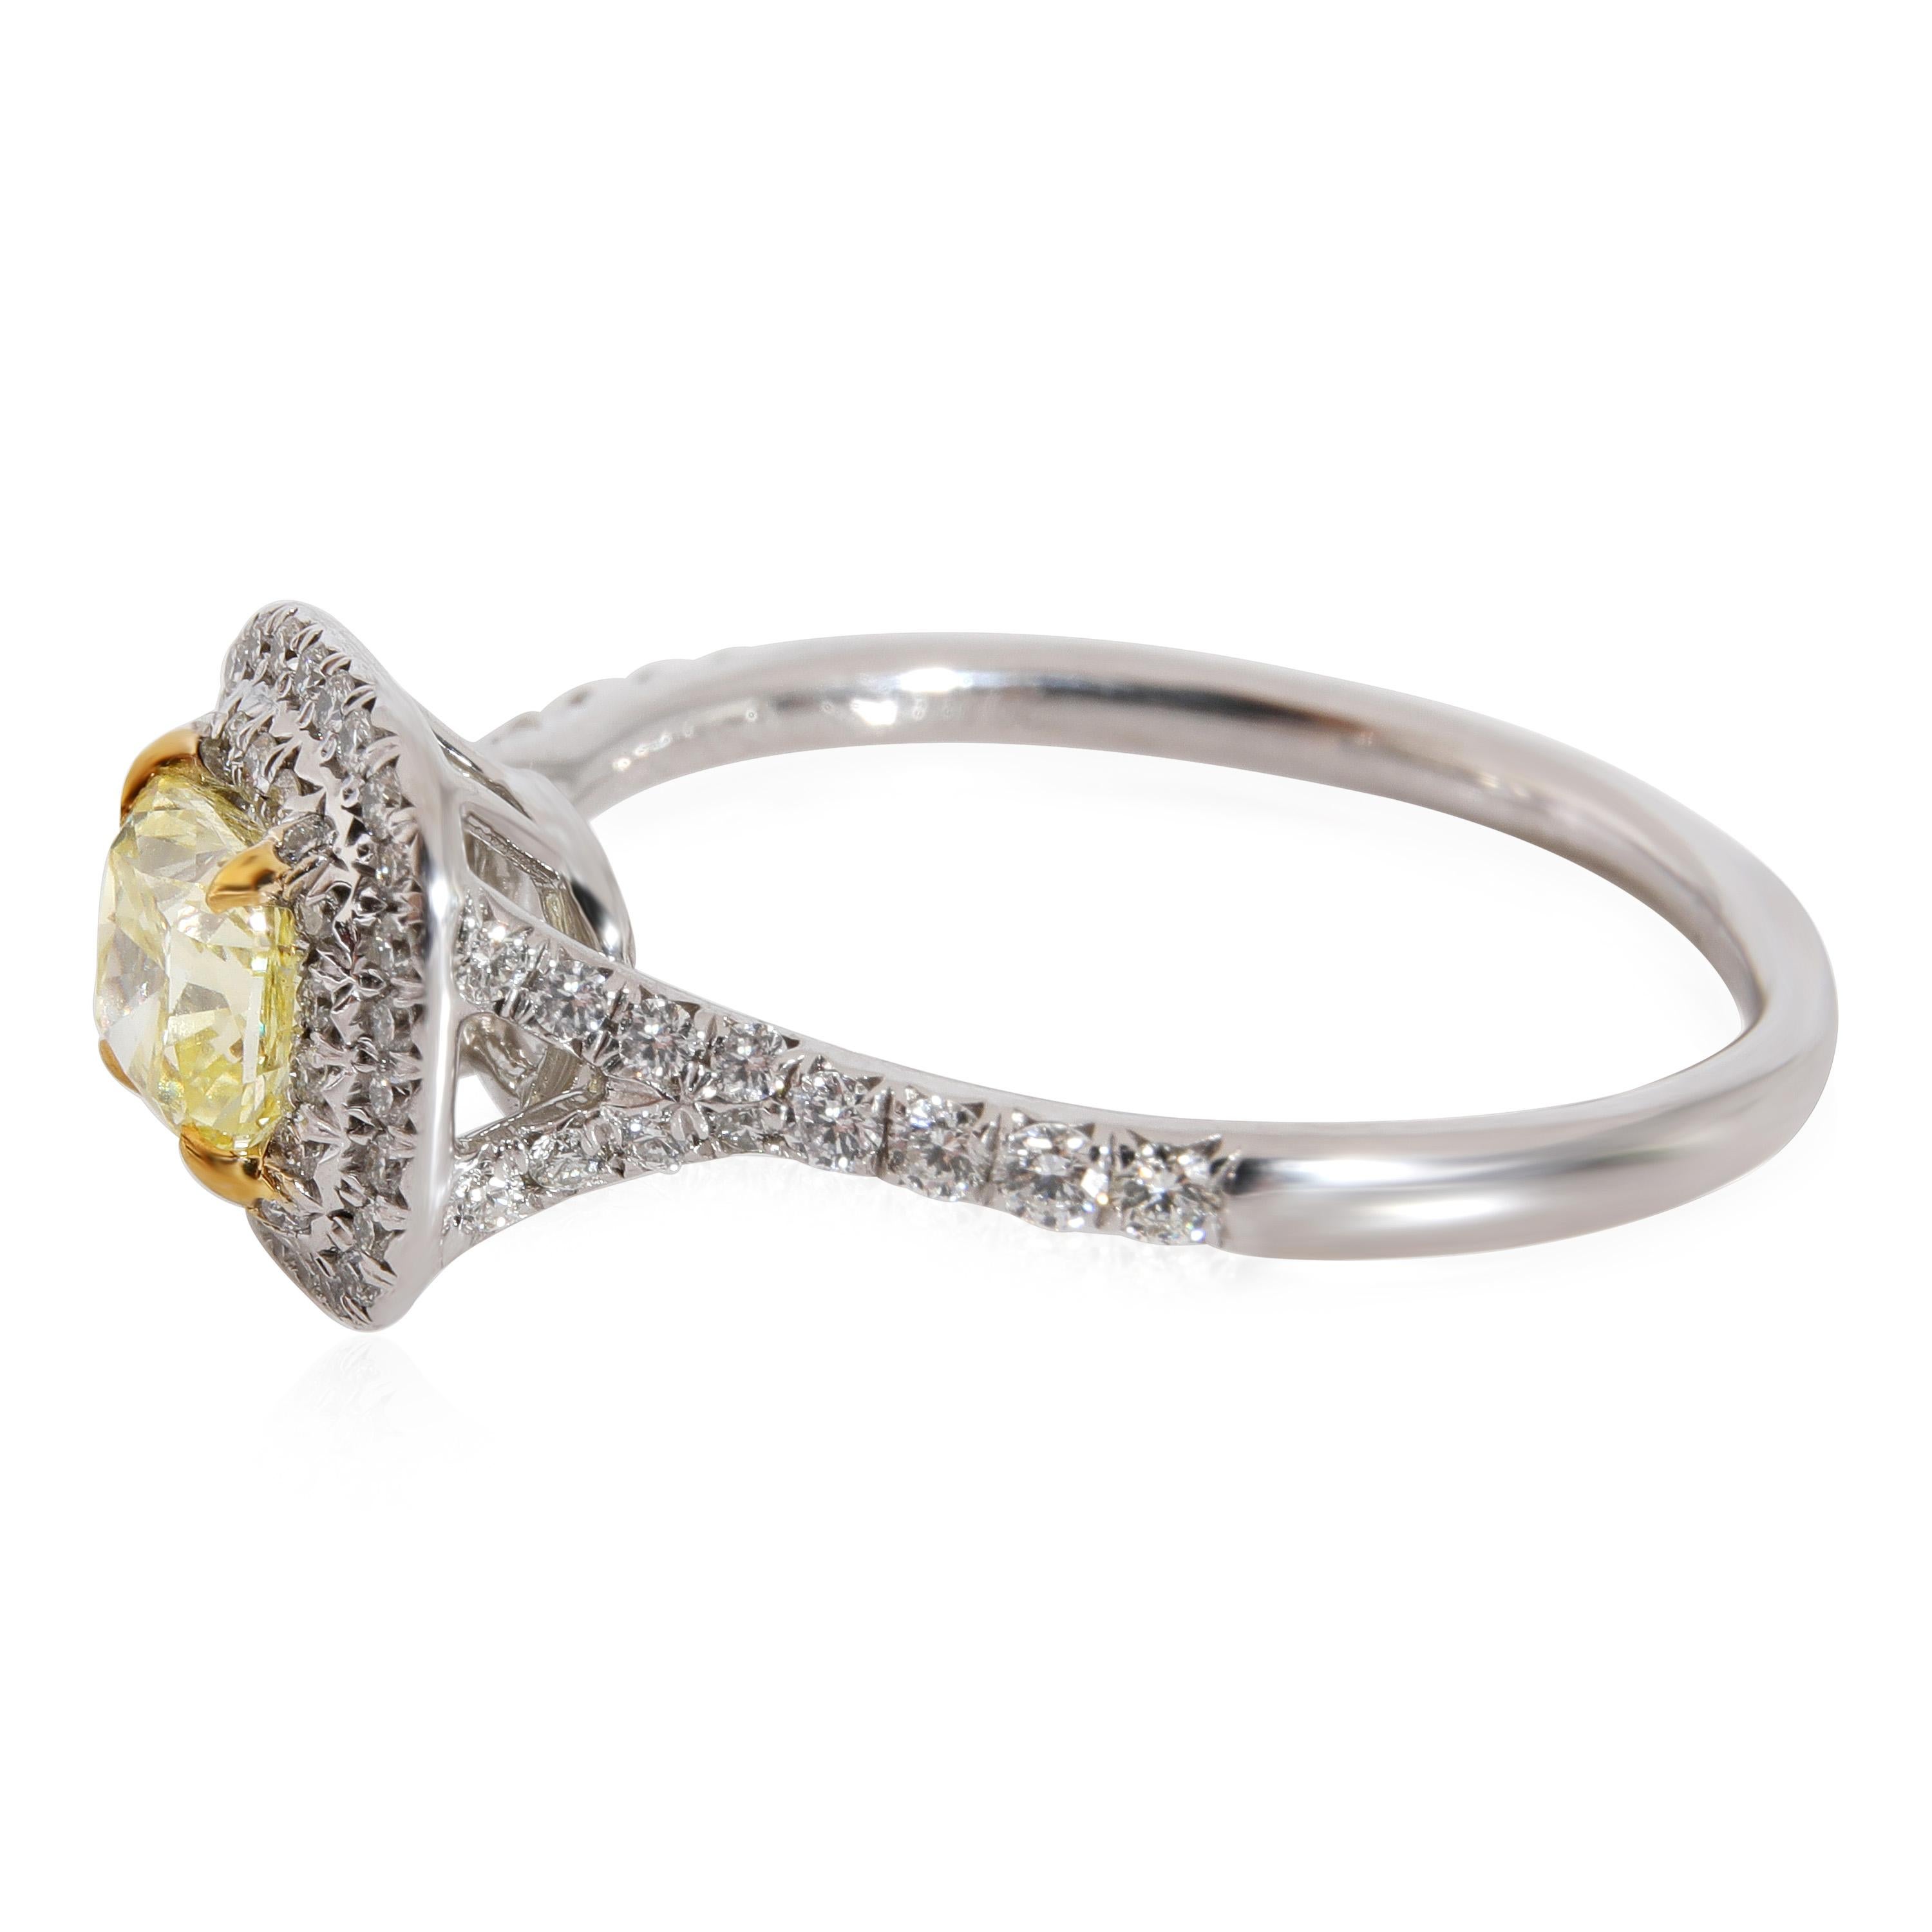 Cushion Cut Tiffany & Co. Soleste Halo Diamond Engagement Ring in 18k Yellow Gold 1.03 Ctw